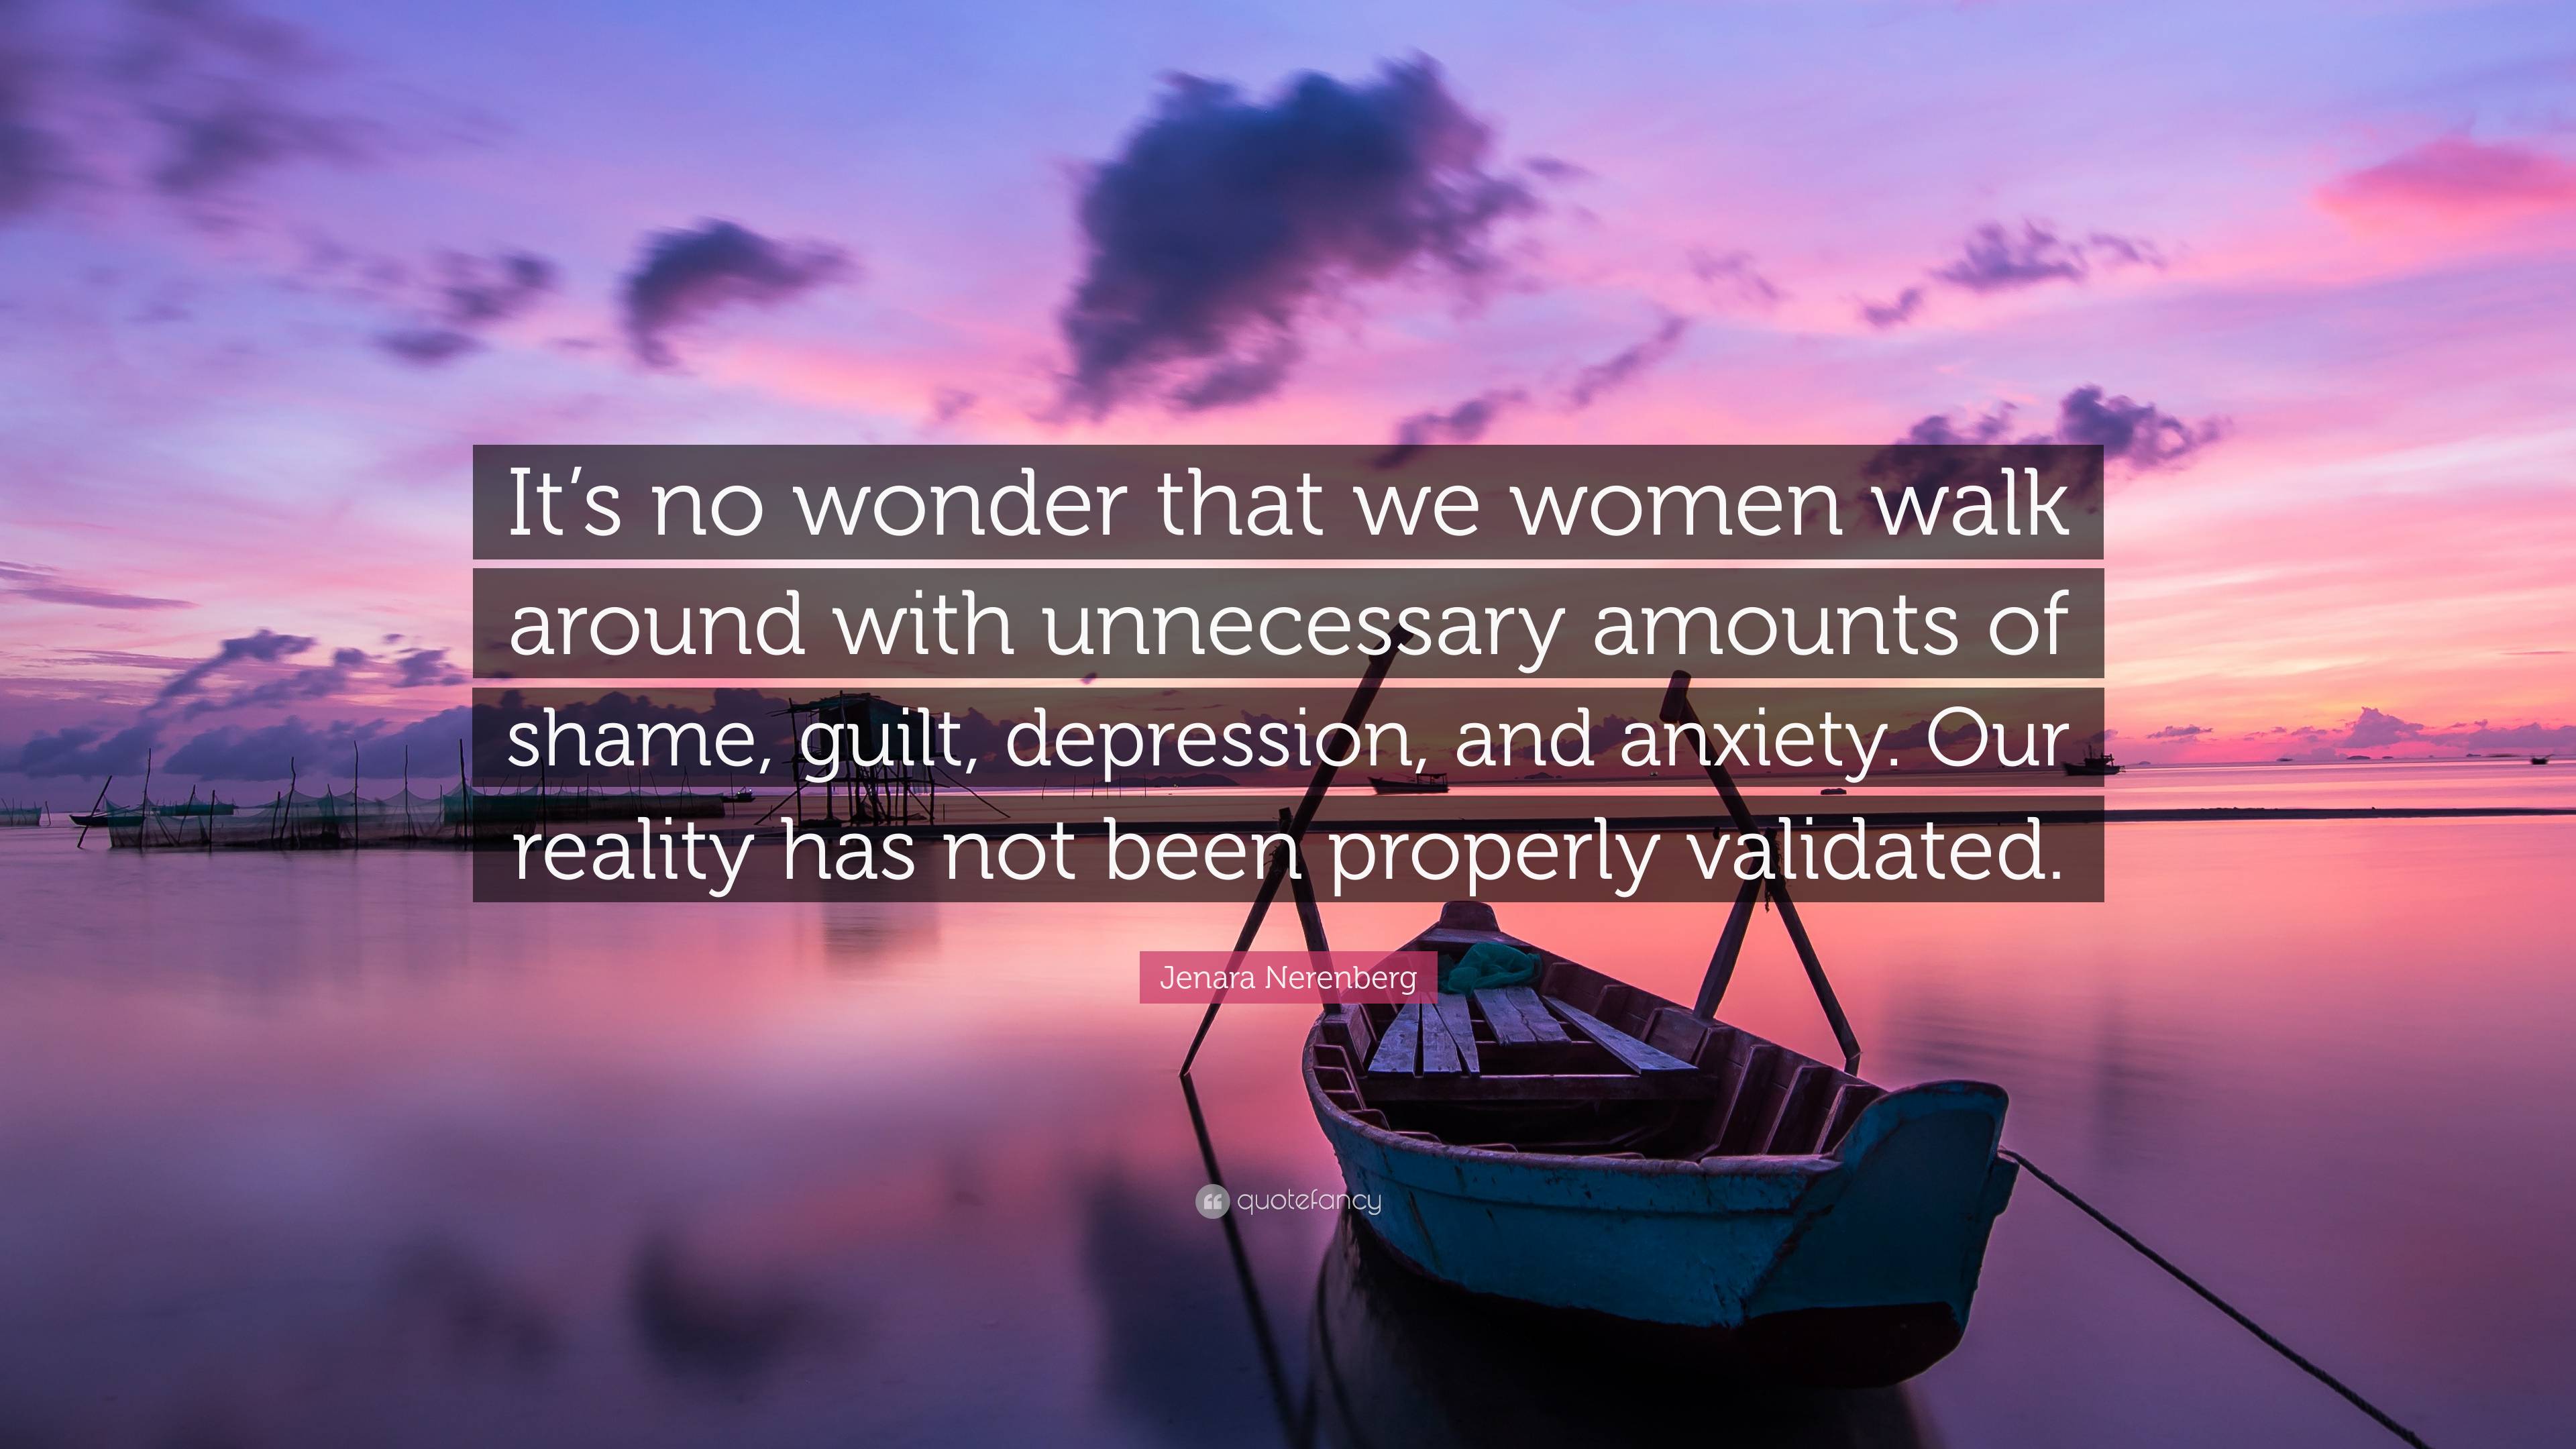 Jenara Nerenberg Quote: “It’s no wonder that we women walk around with ...